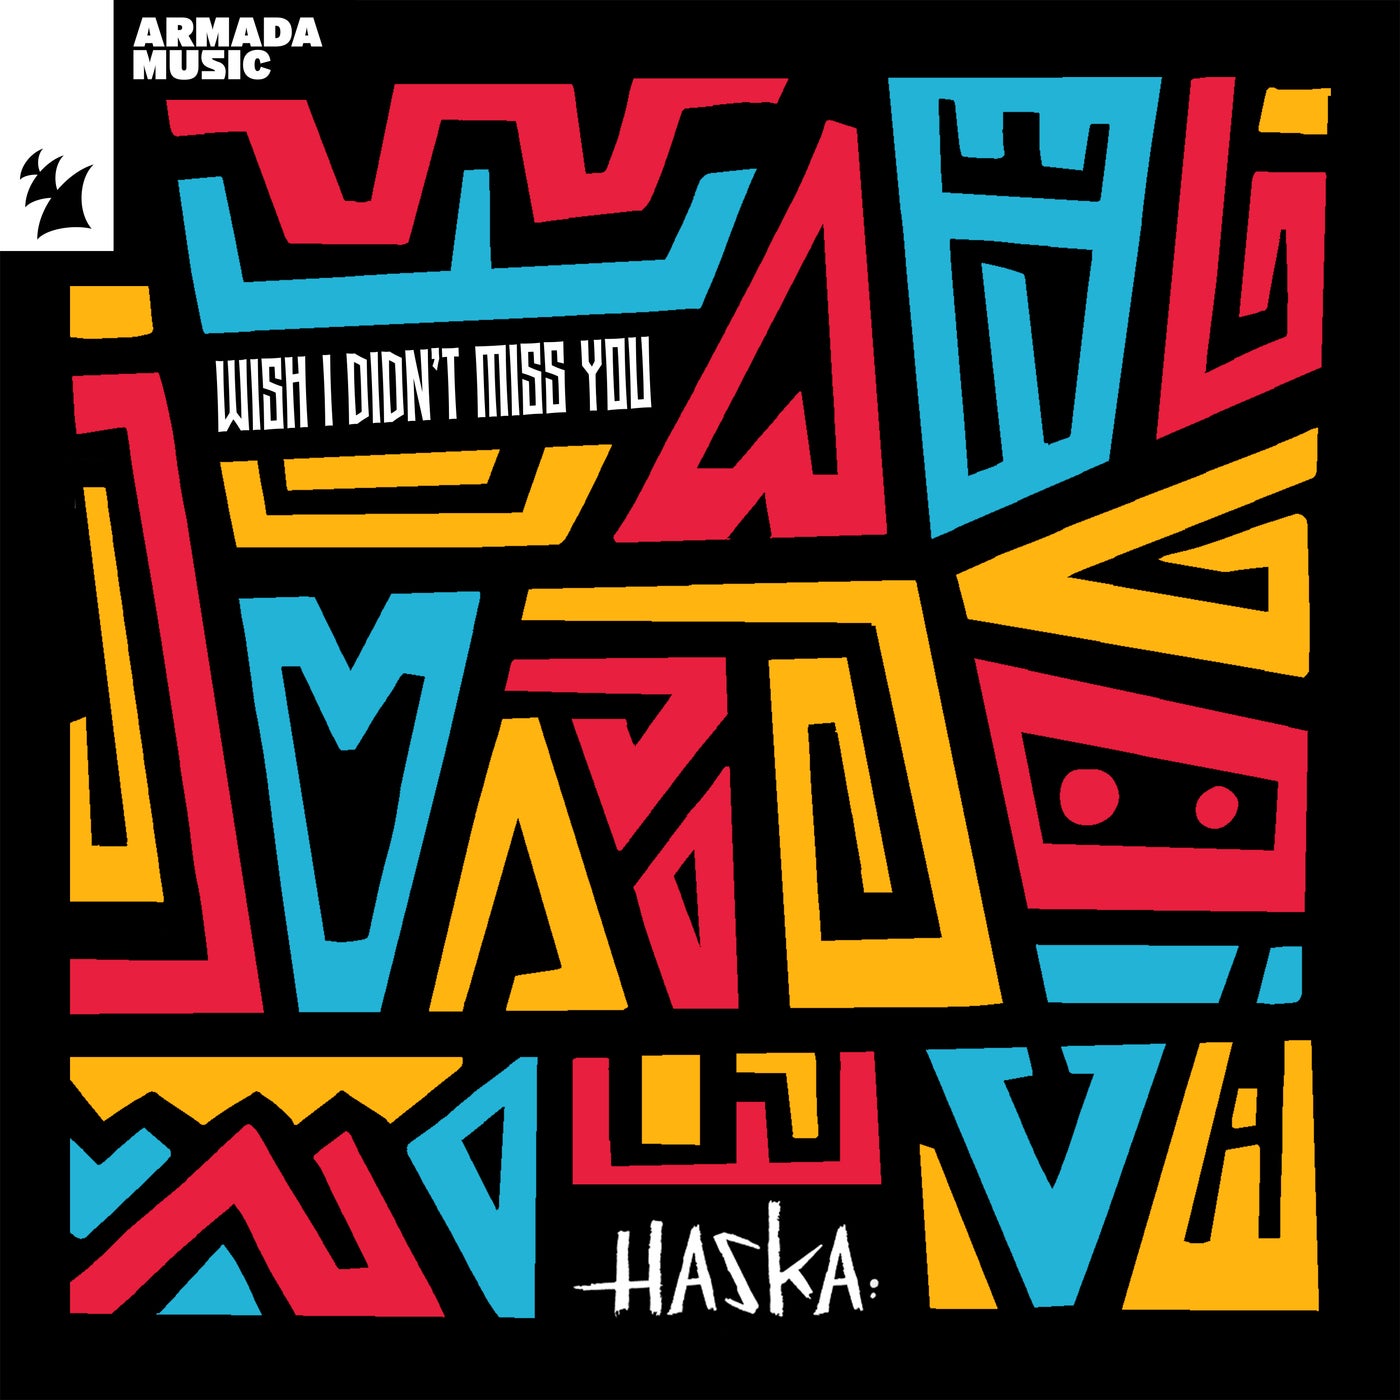 image cover: Haska - Wish I Didn't Miss You on Armada Music